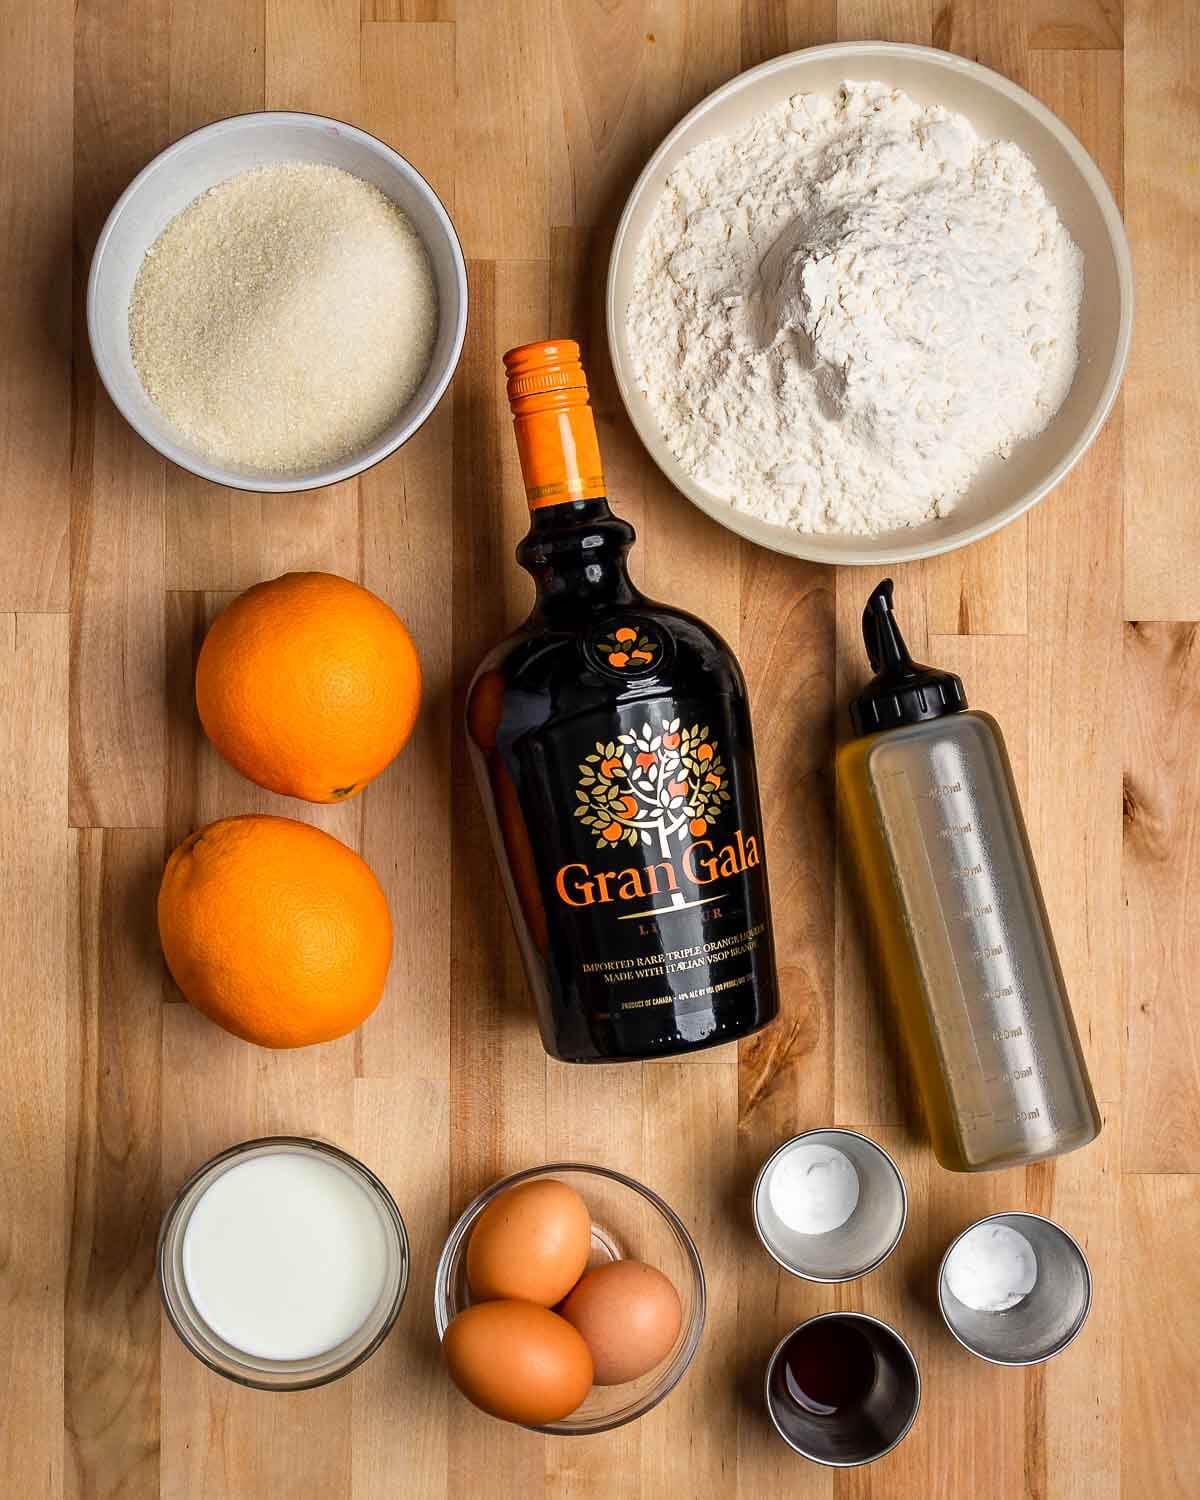 Ingredients shown: sugar, flour, oranges, Gran Gala, olive oil, milk, eggs, baking powder, baking soda, and vanilla extract.